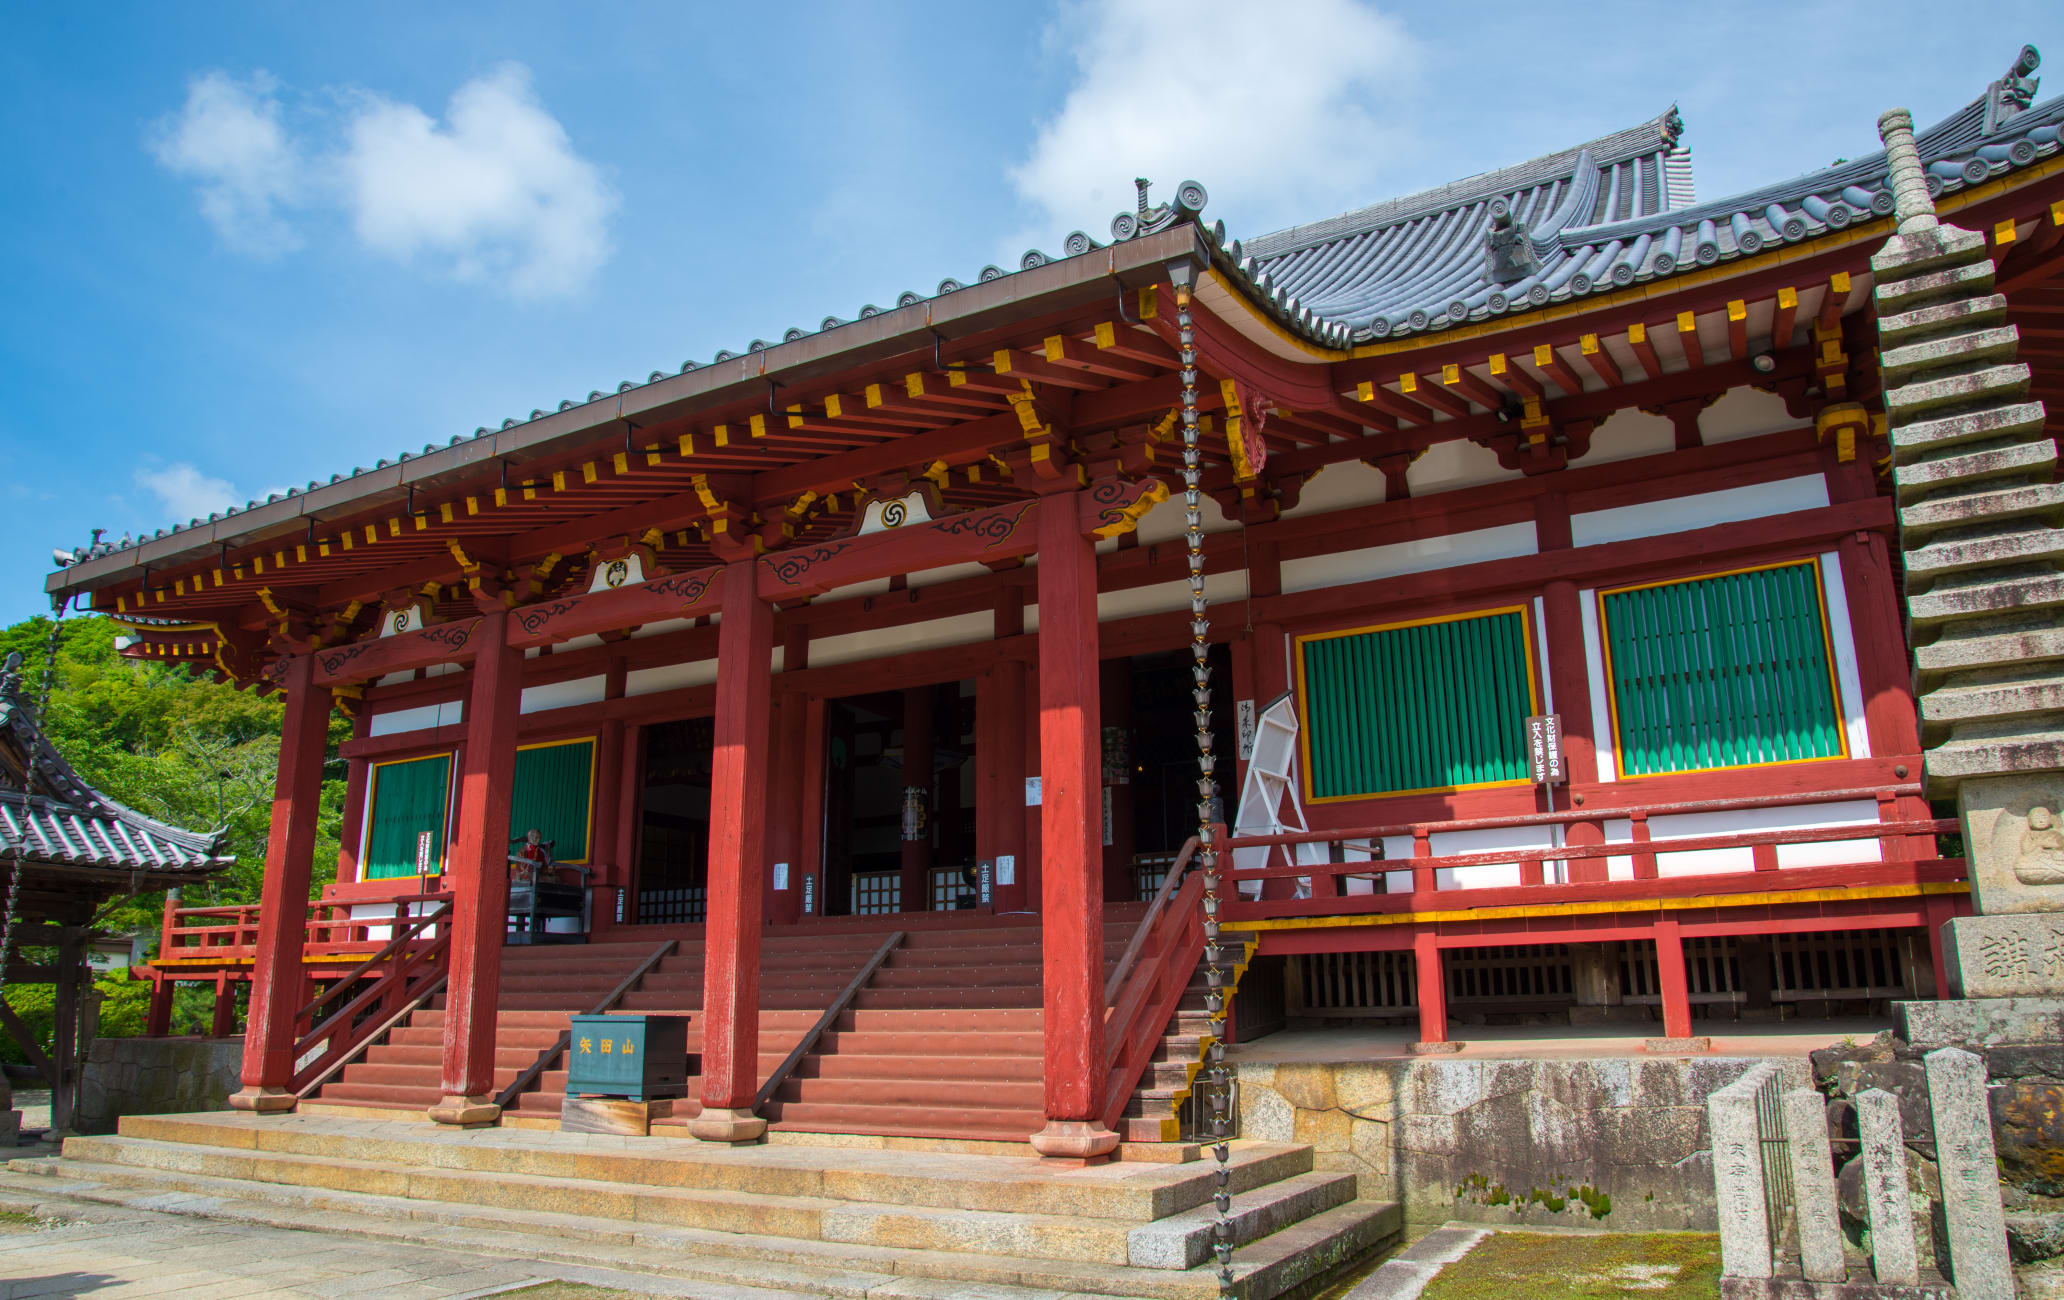 Kongosen-ji Temple